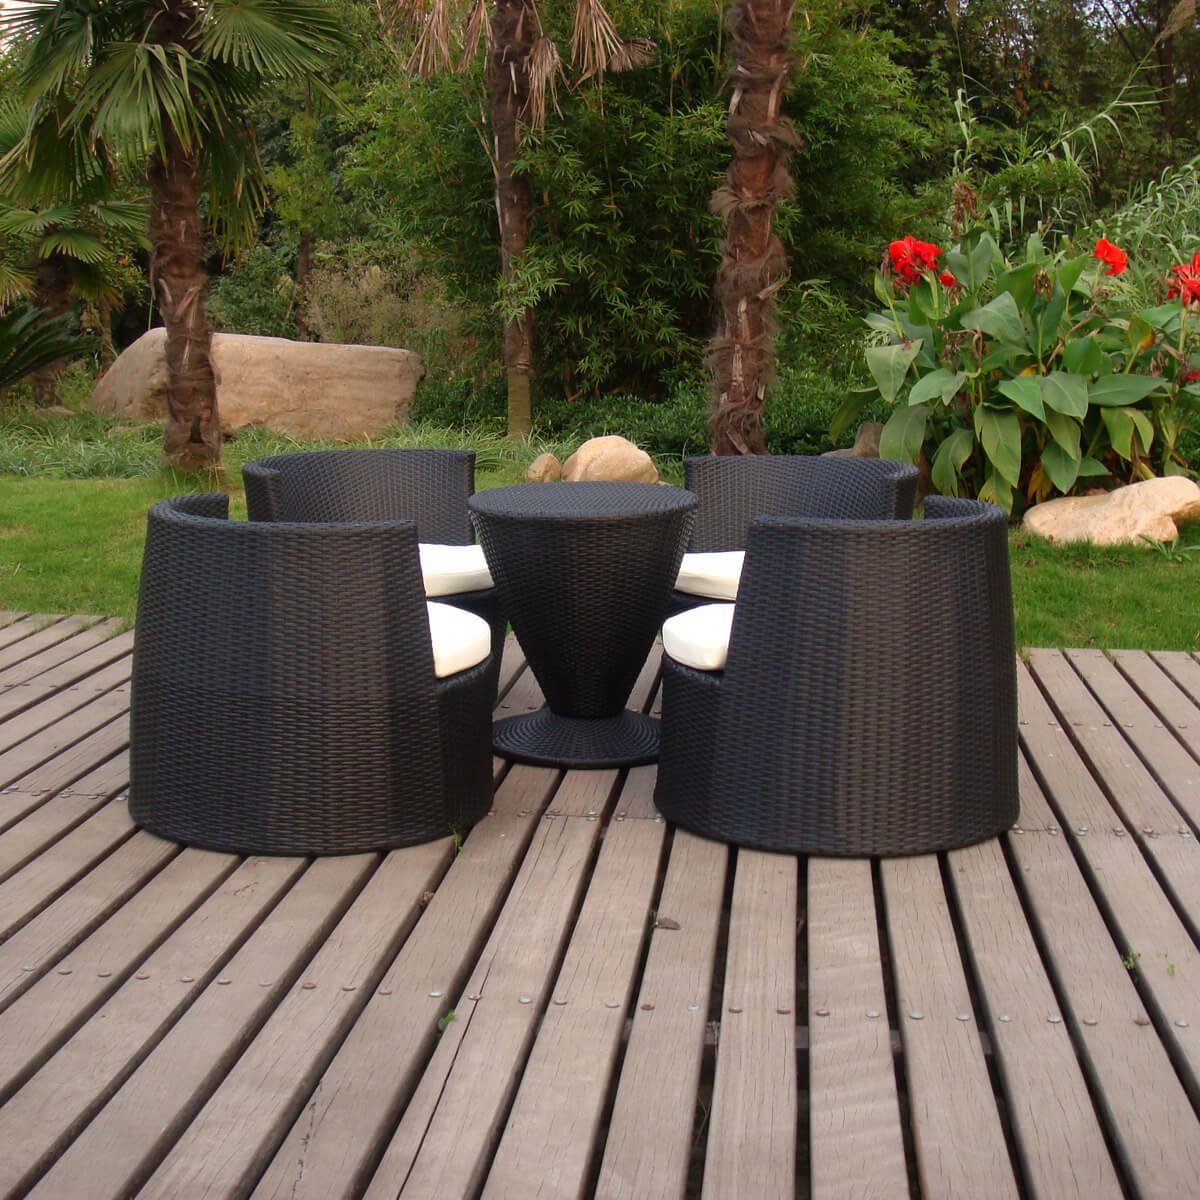 Outdoor and Garden Furniture